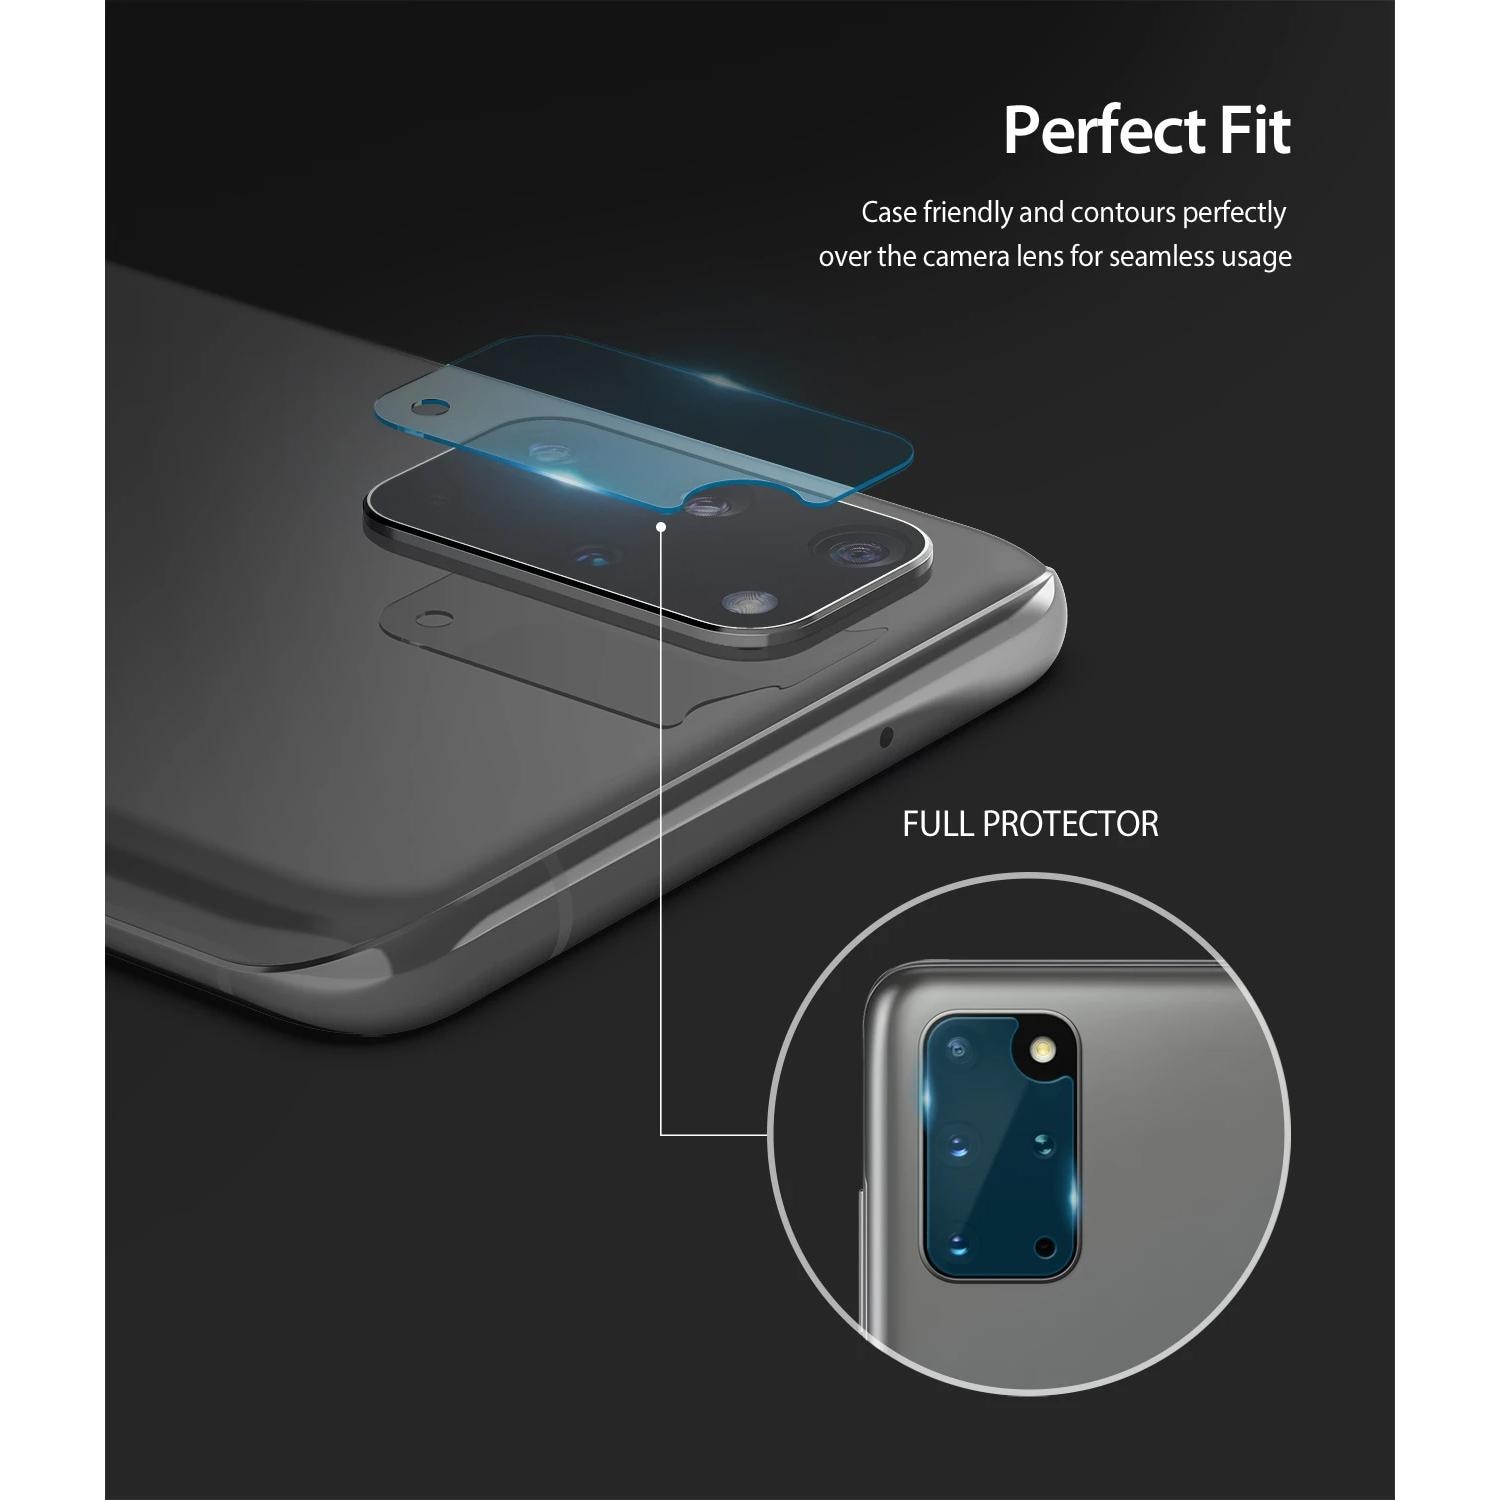 ID Glass Camera Protector Samsung Galaxy S20 Plus